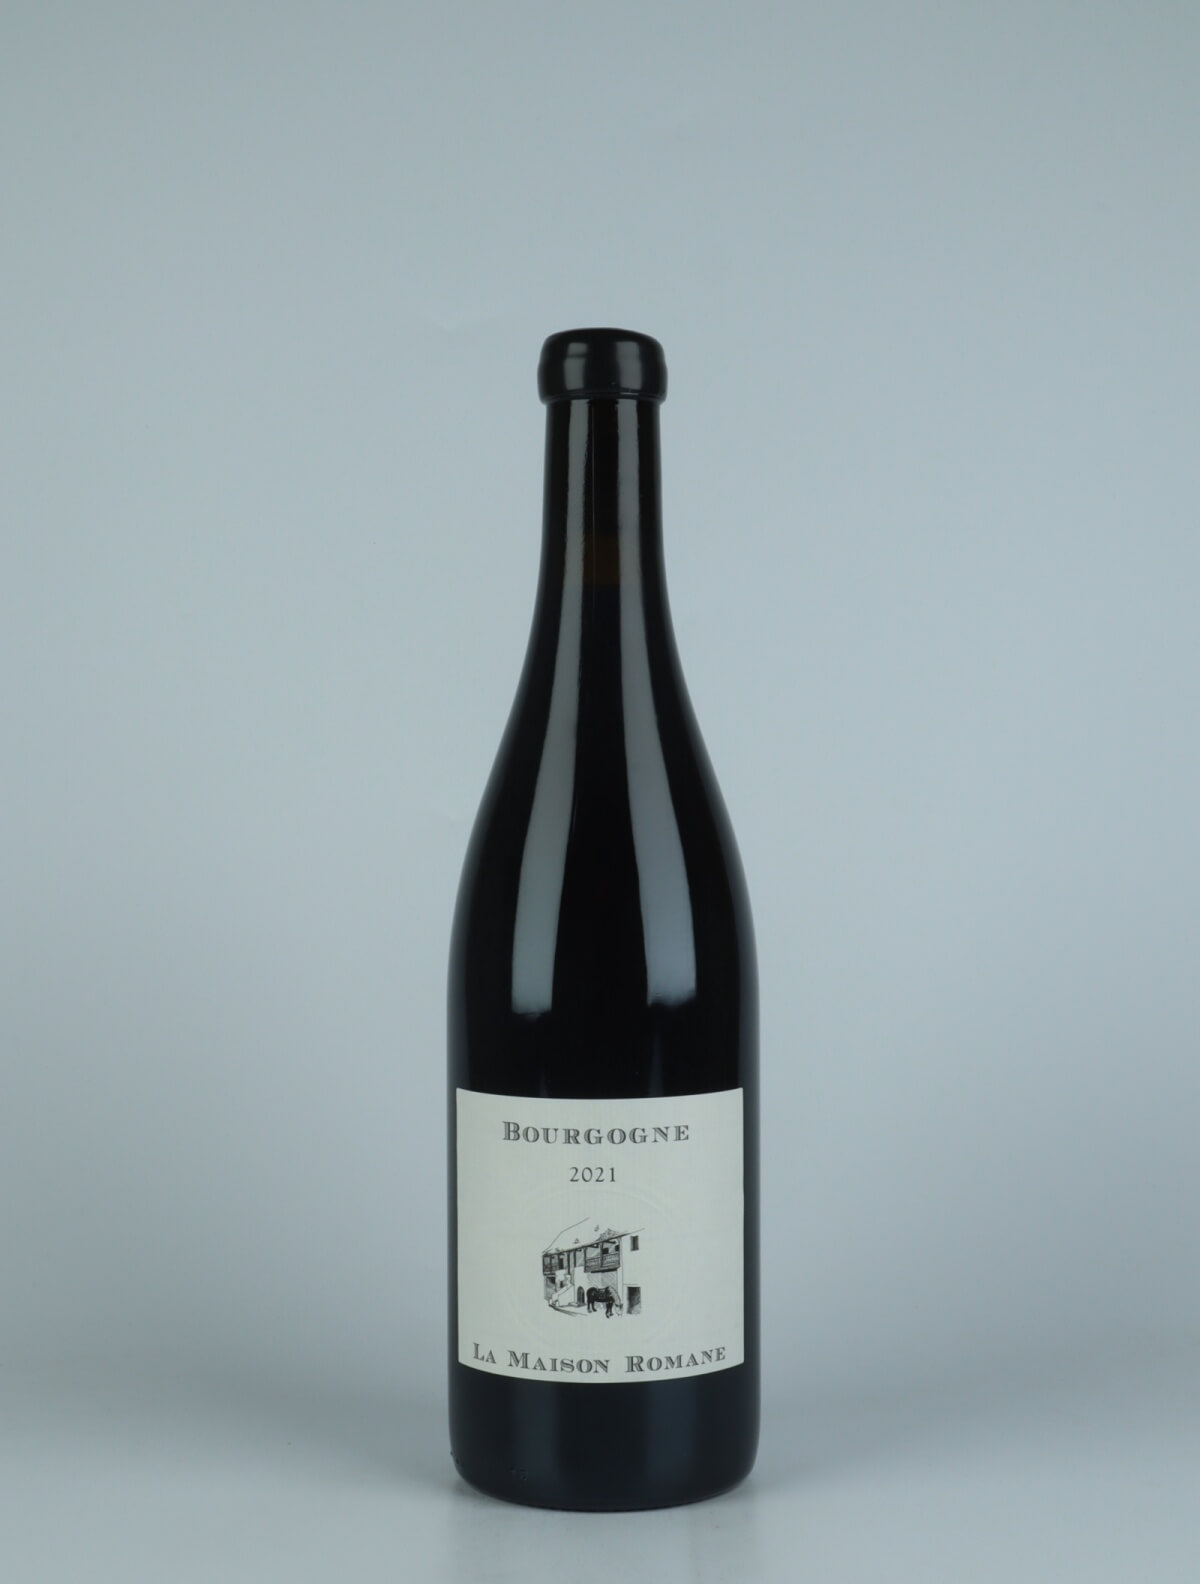 A bottle 2021 Bourgogne Rouge Red wine from La Maison Romane, Burgundy in France